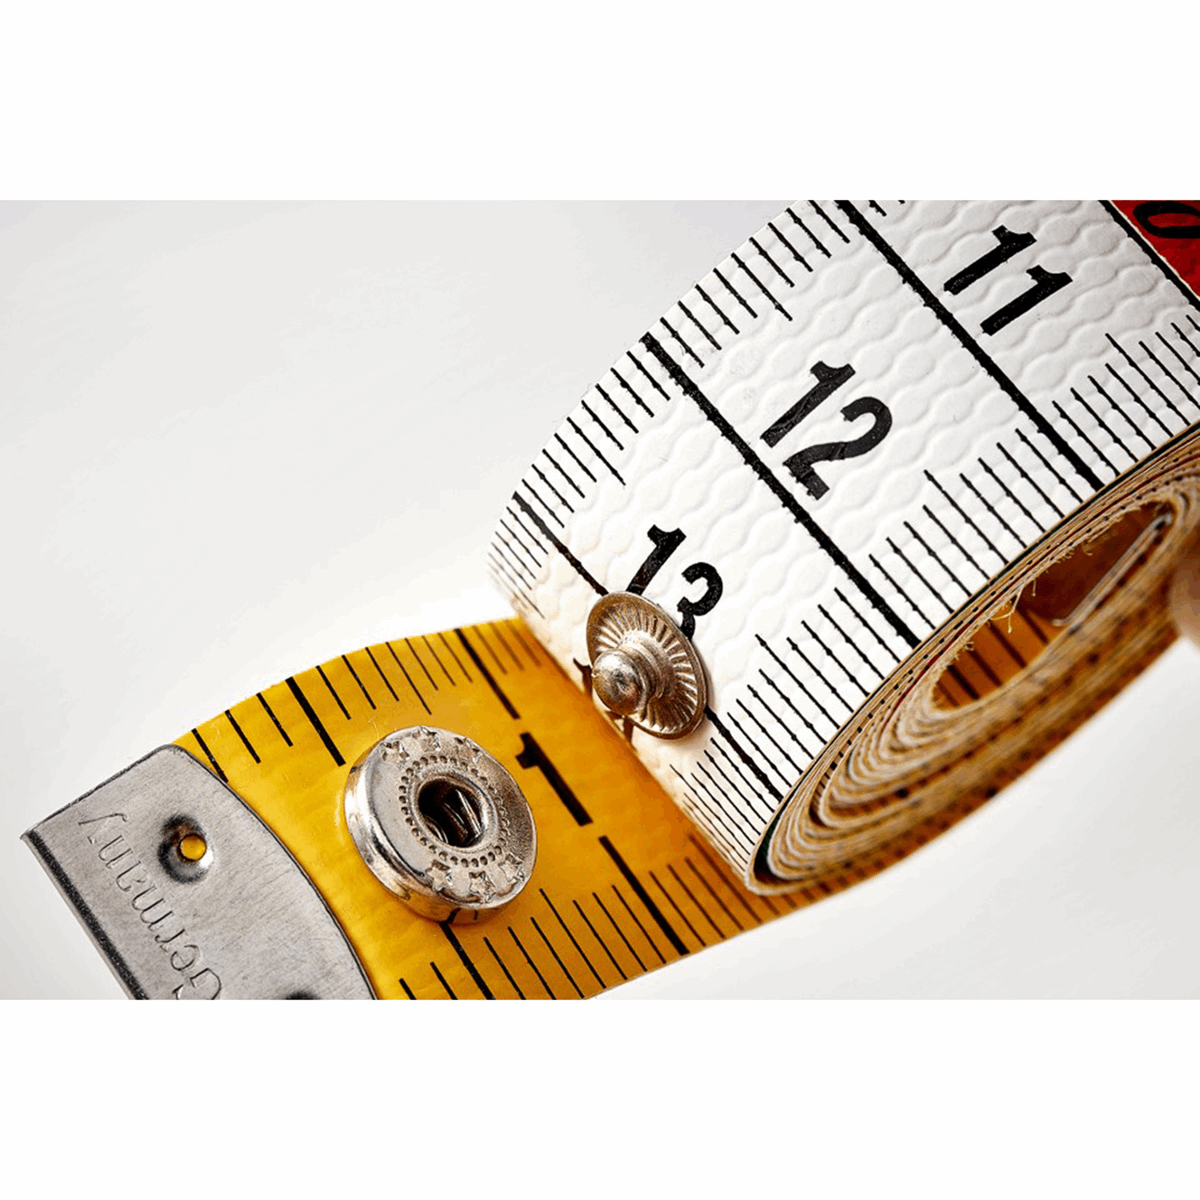 German Quality Measuring Ruler Sewing Tailor Tape Measure 150cm